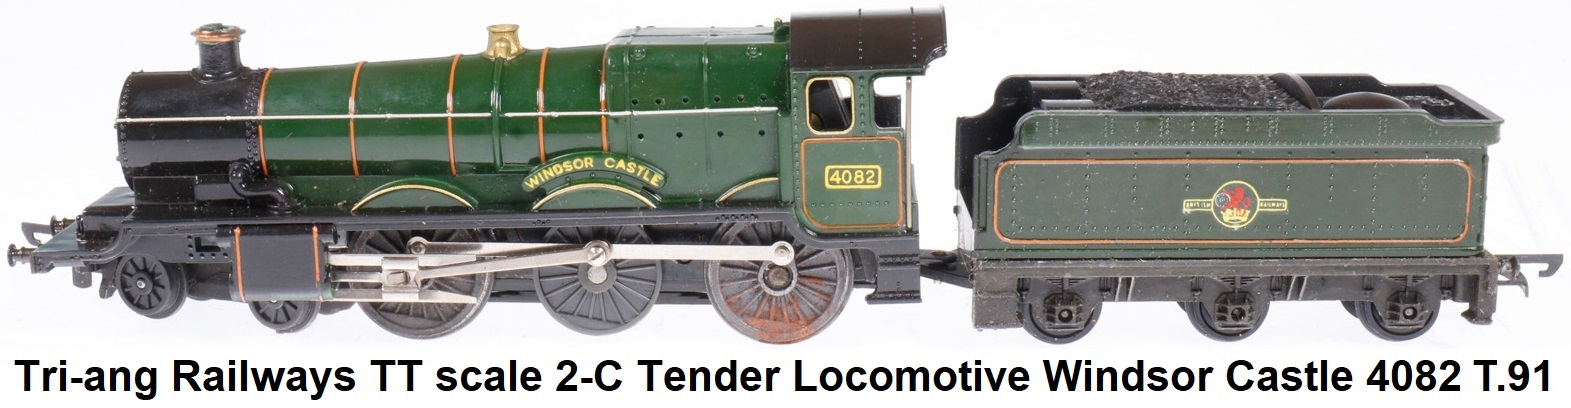 Tri-ang TT scale 2-C Tender Locomotive Windsor Castle #4082 T.91